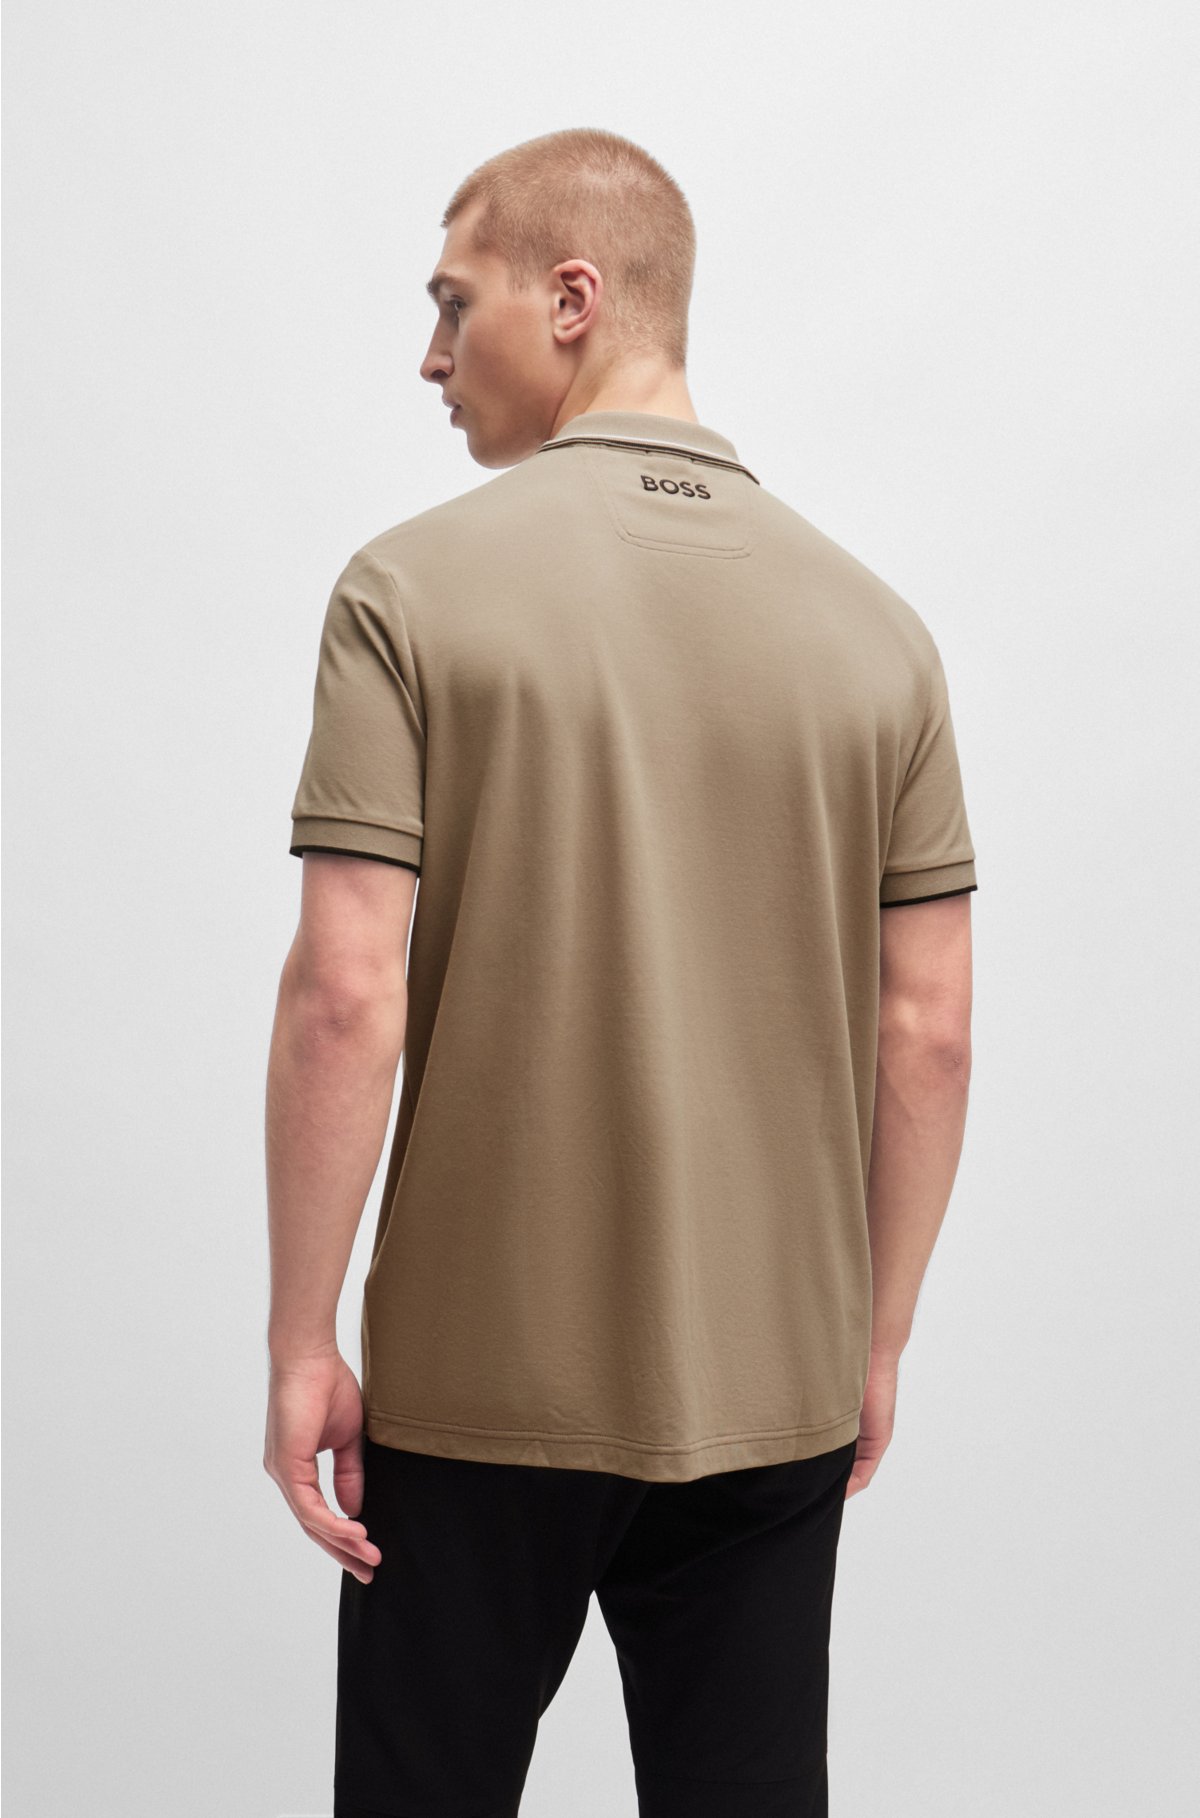 Cotton-blend polo shirt with contrast logos, Khaki